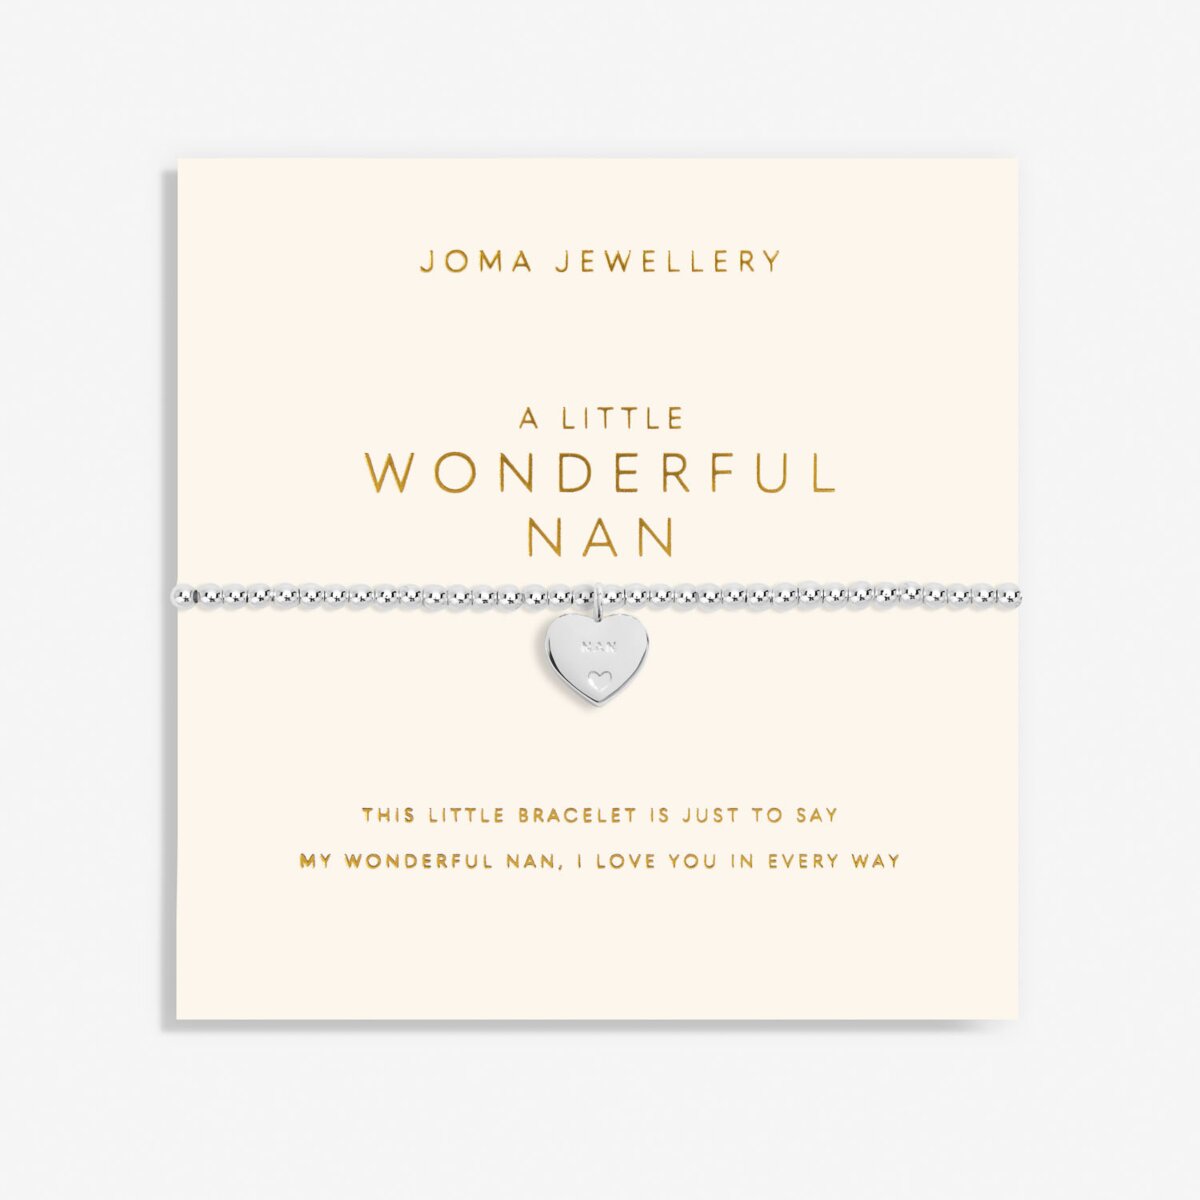 JOMA JEWELLERY | MOTHER'S DAY GRANDPARENT A LITTLE | WONDERFUL NAN BRACELET